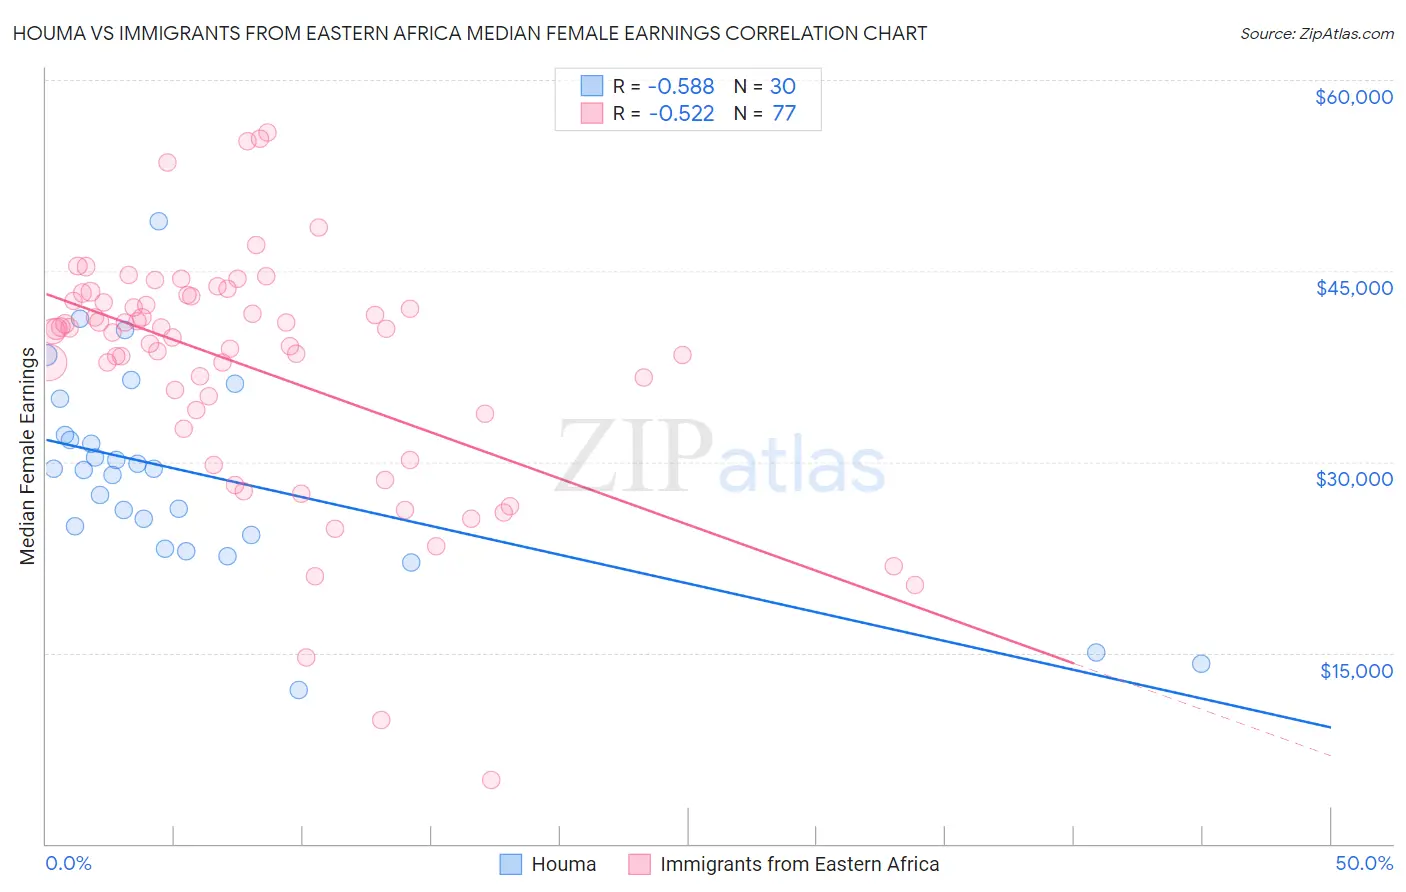 Houma vs Immigrants from Eastern Africa Median Female Earnings